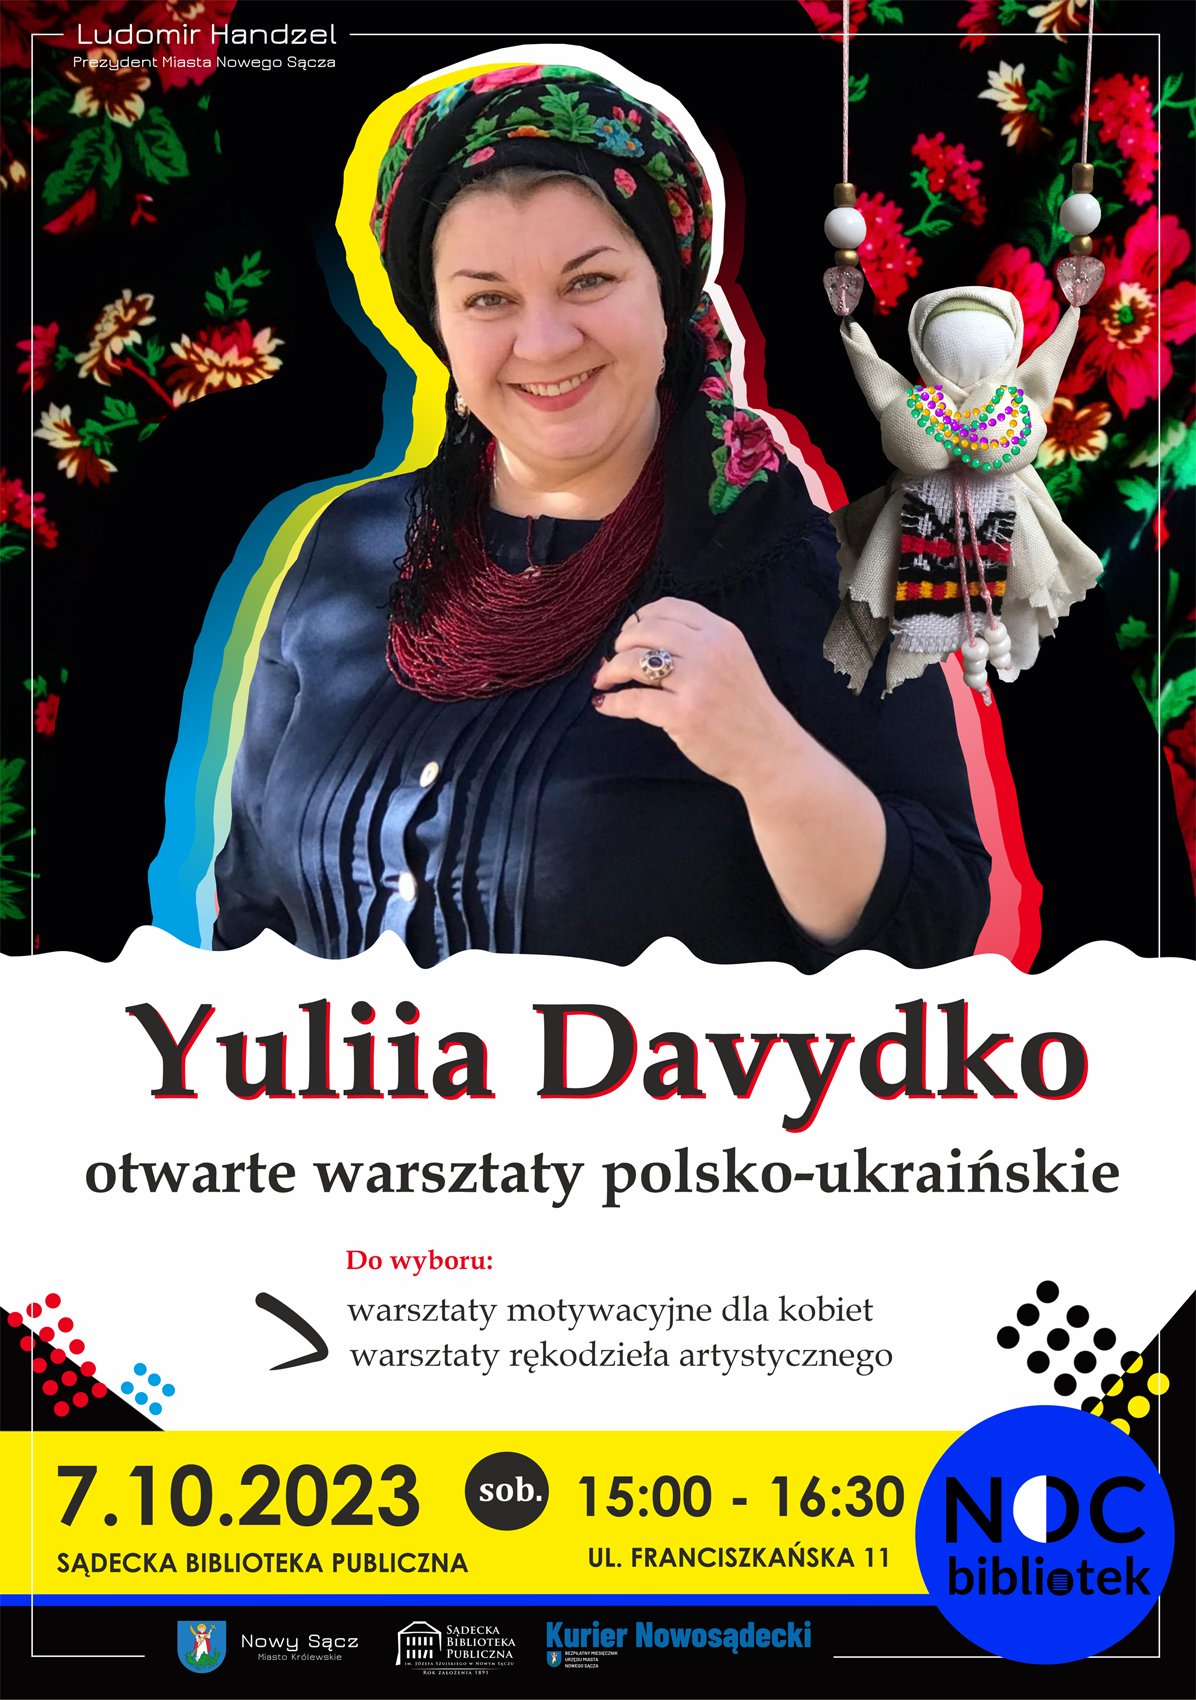 [warsztaty]: Yuliia Davydko Otwarte warsztary polsko-ukraińskie 